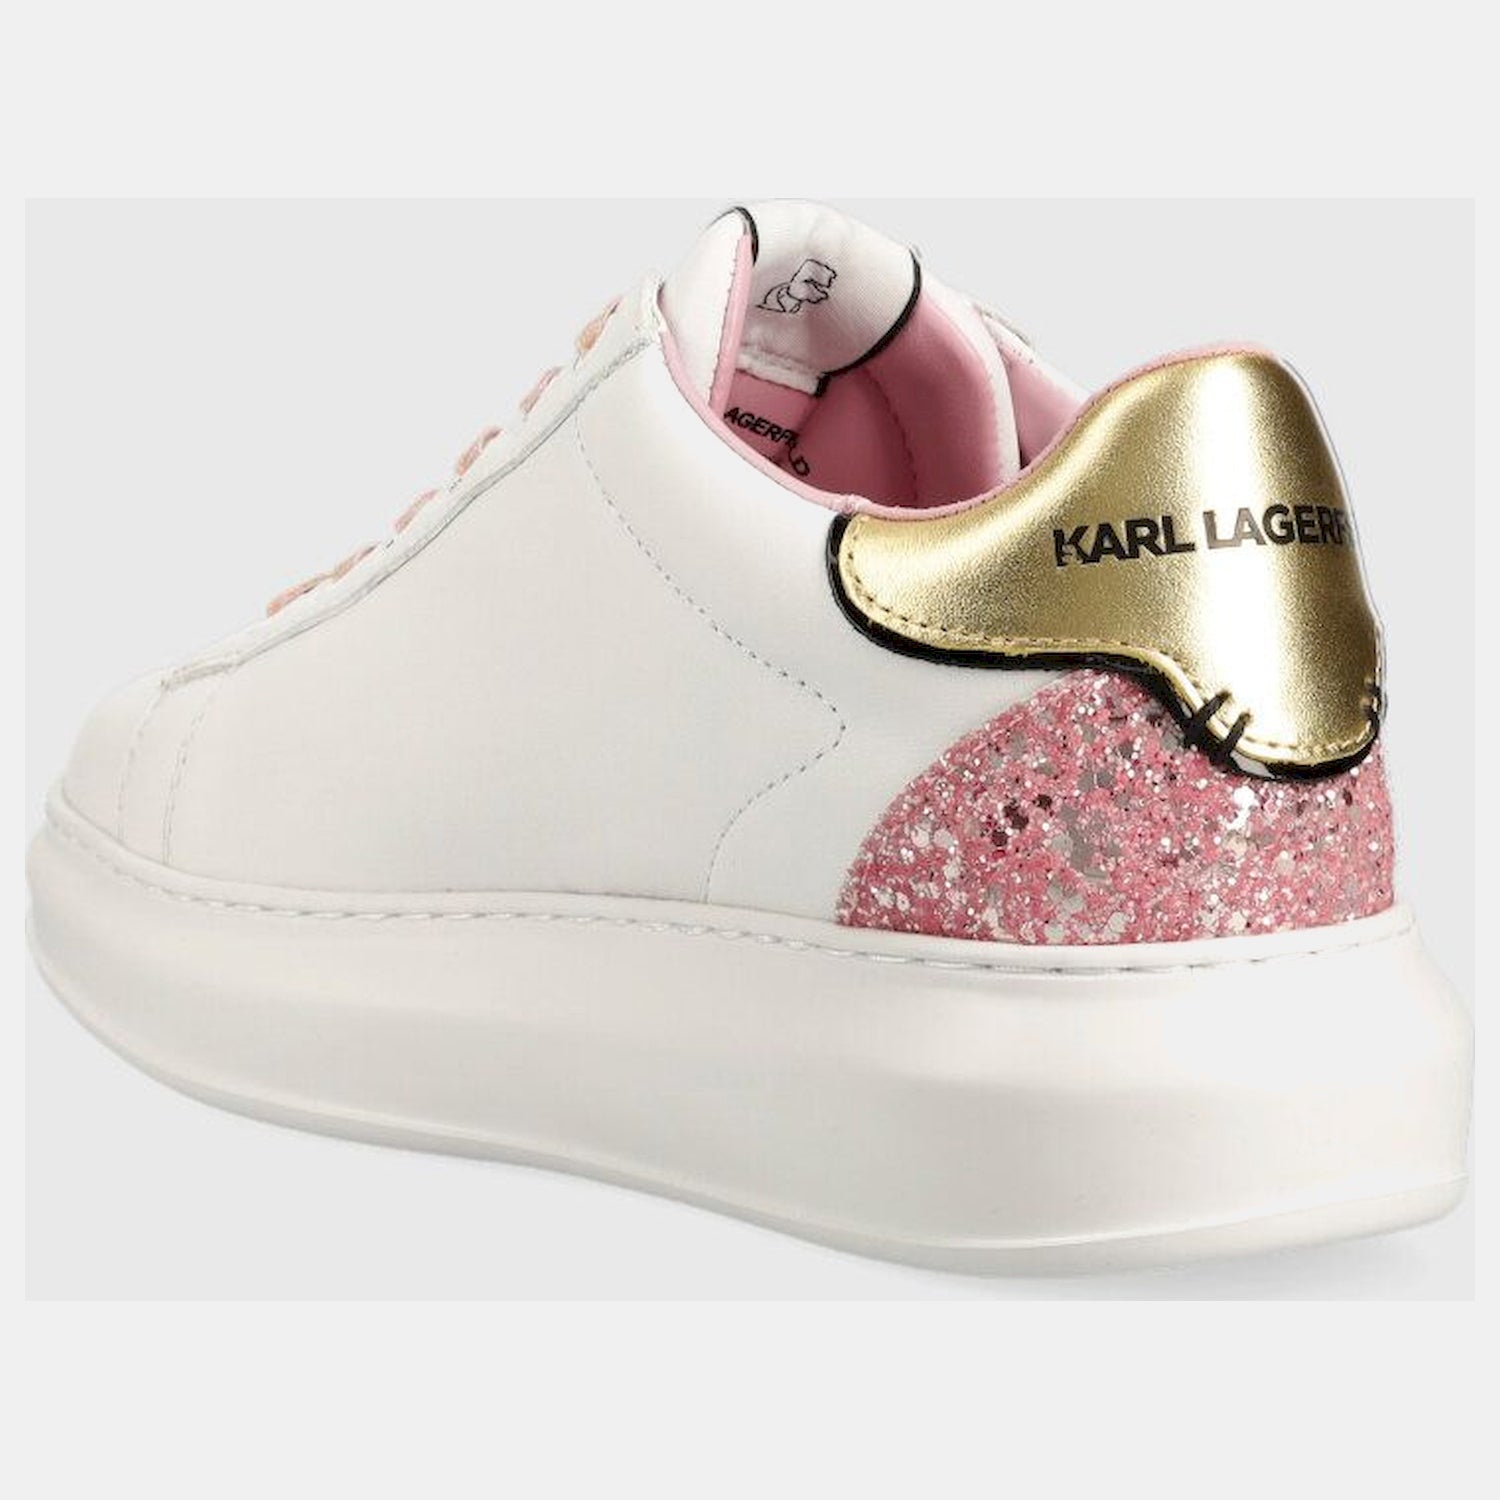 Karl Lagerfeld Sapatilhas Sneakers Shoes Kl62570n Whi Pink Branco Rosa_shot3